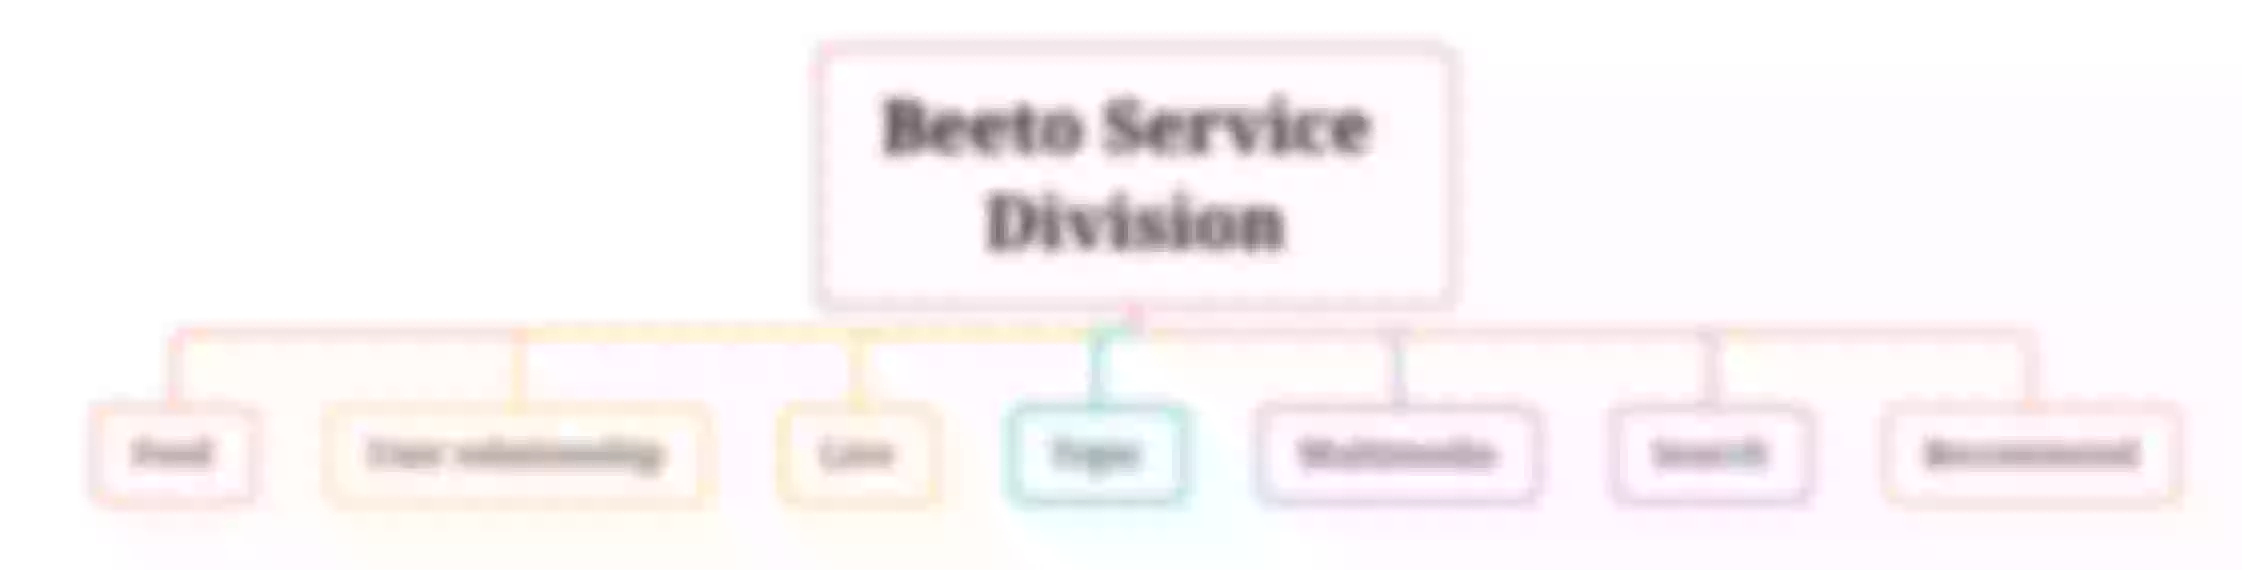 Service division